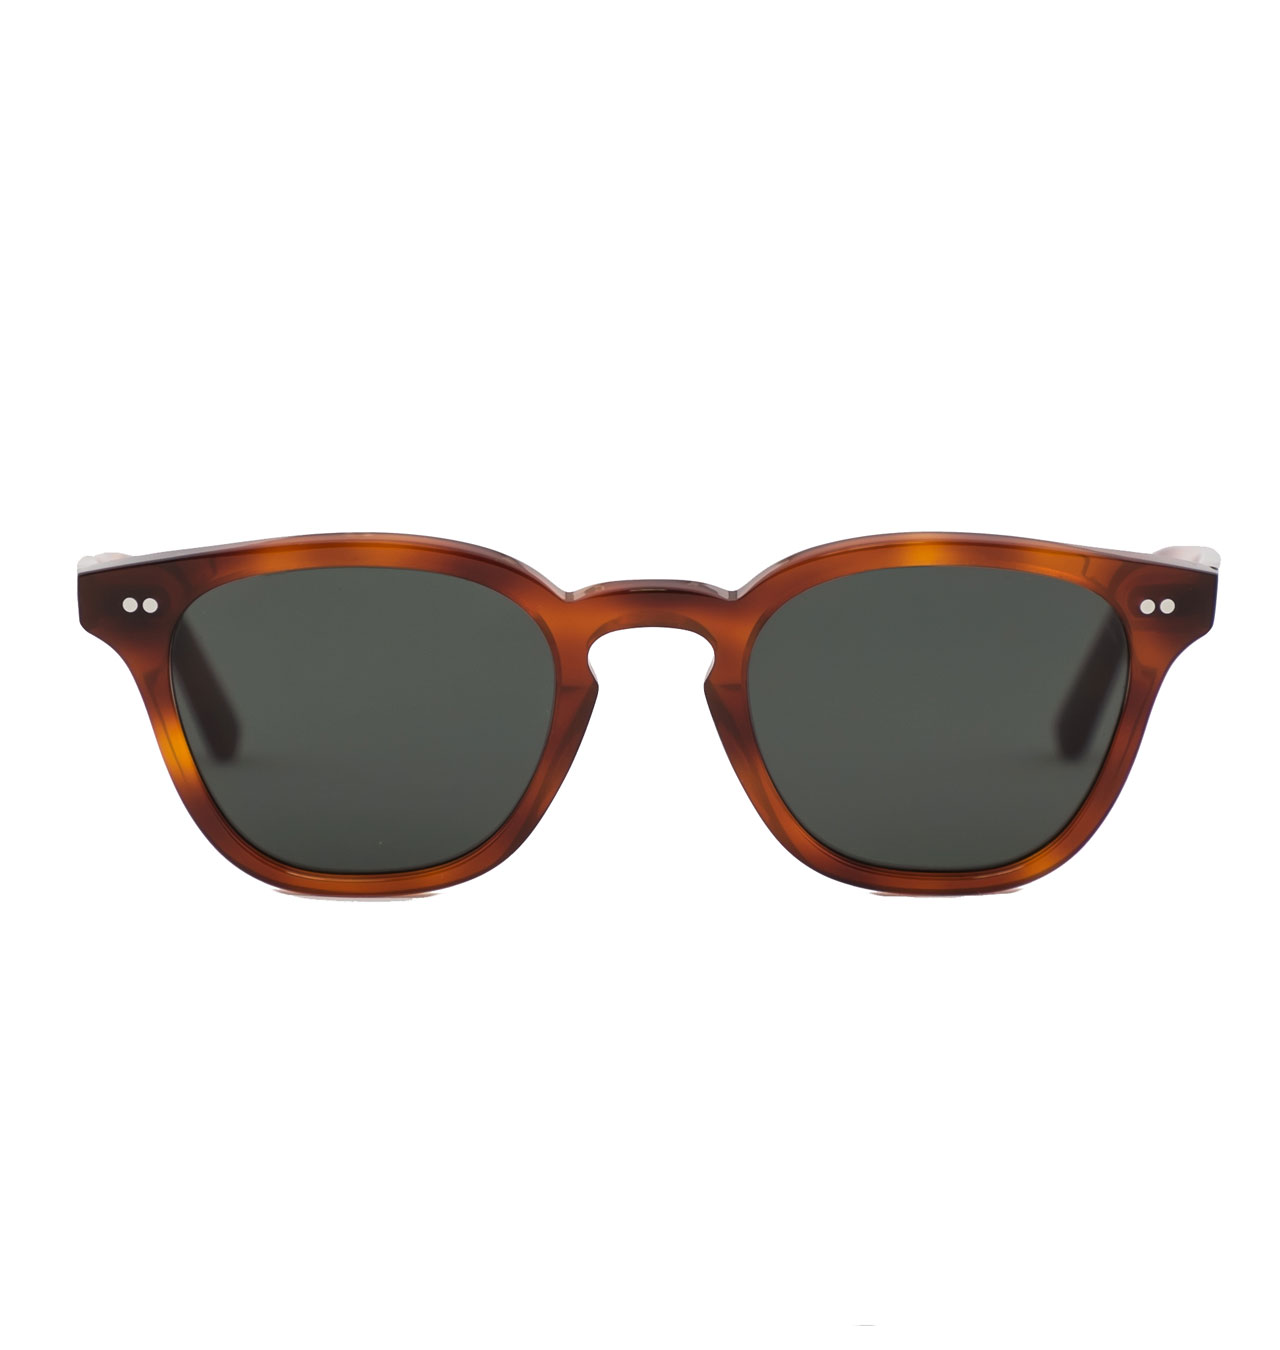 Monokel Eyewear - River Amber Sunglasses - Green Solid Lens